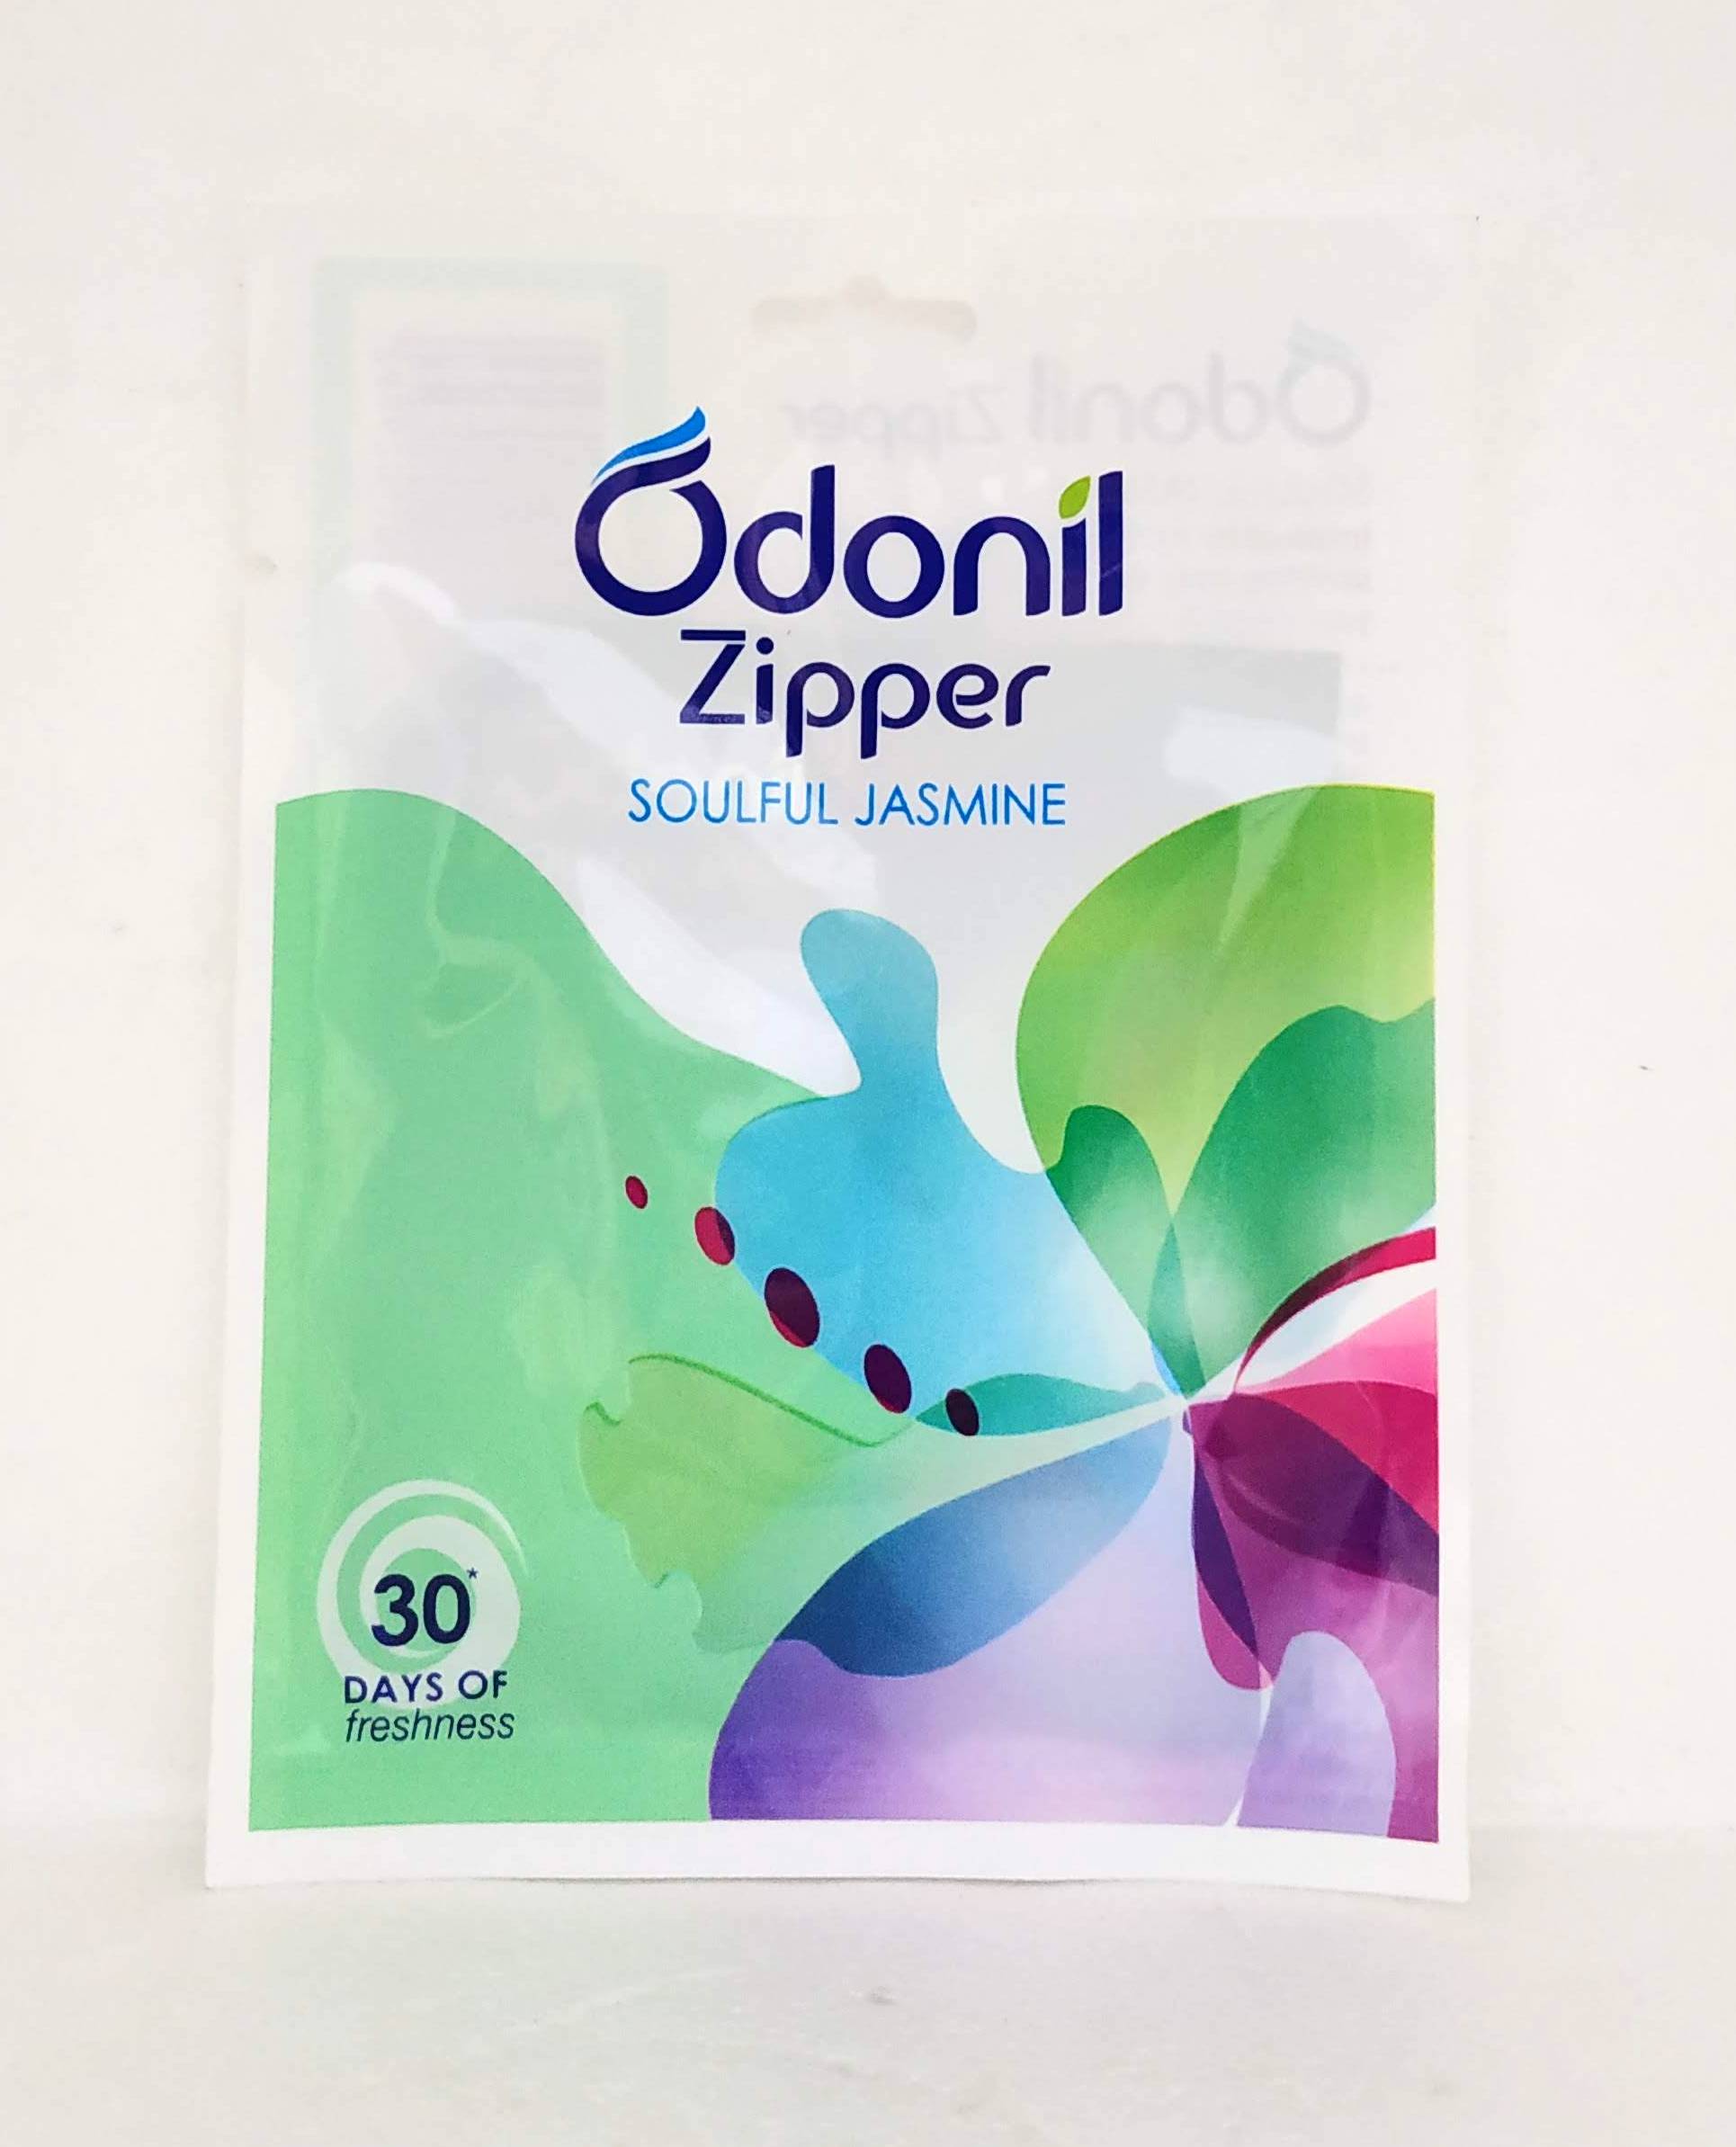 Shop Odonil Zipper - Soulful Jasmine at price 55.00 from Dabur Online - Ayush Care